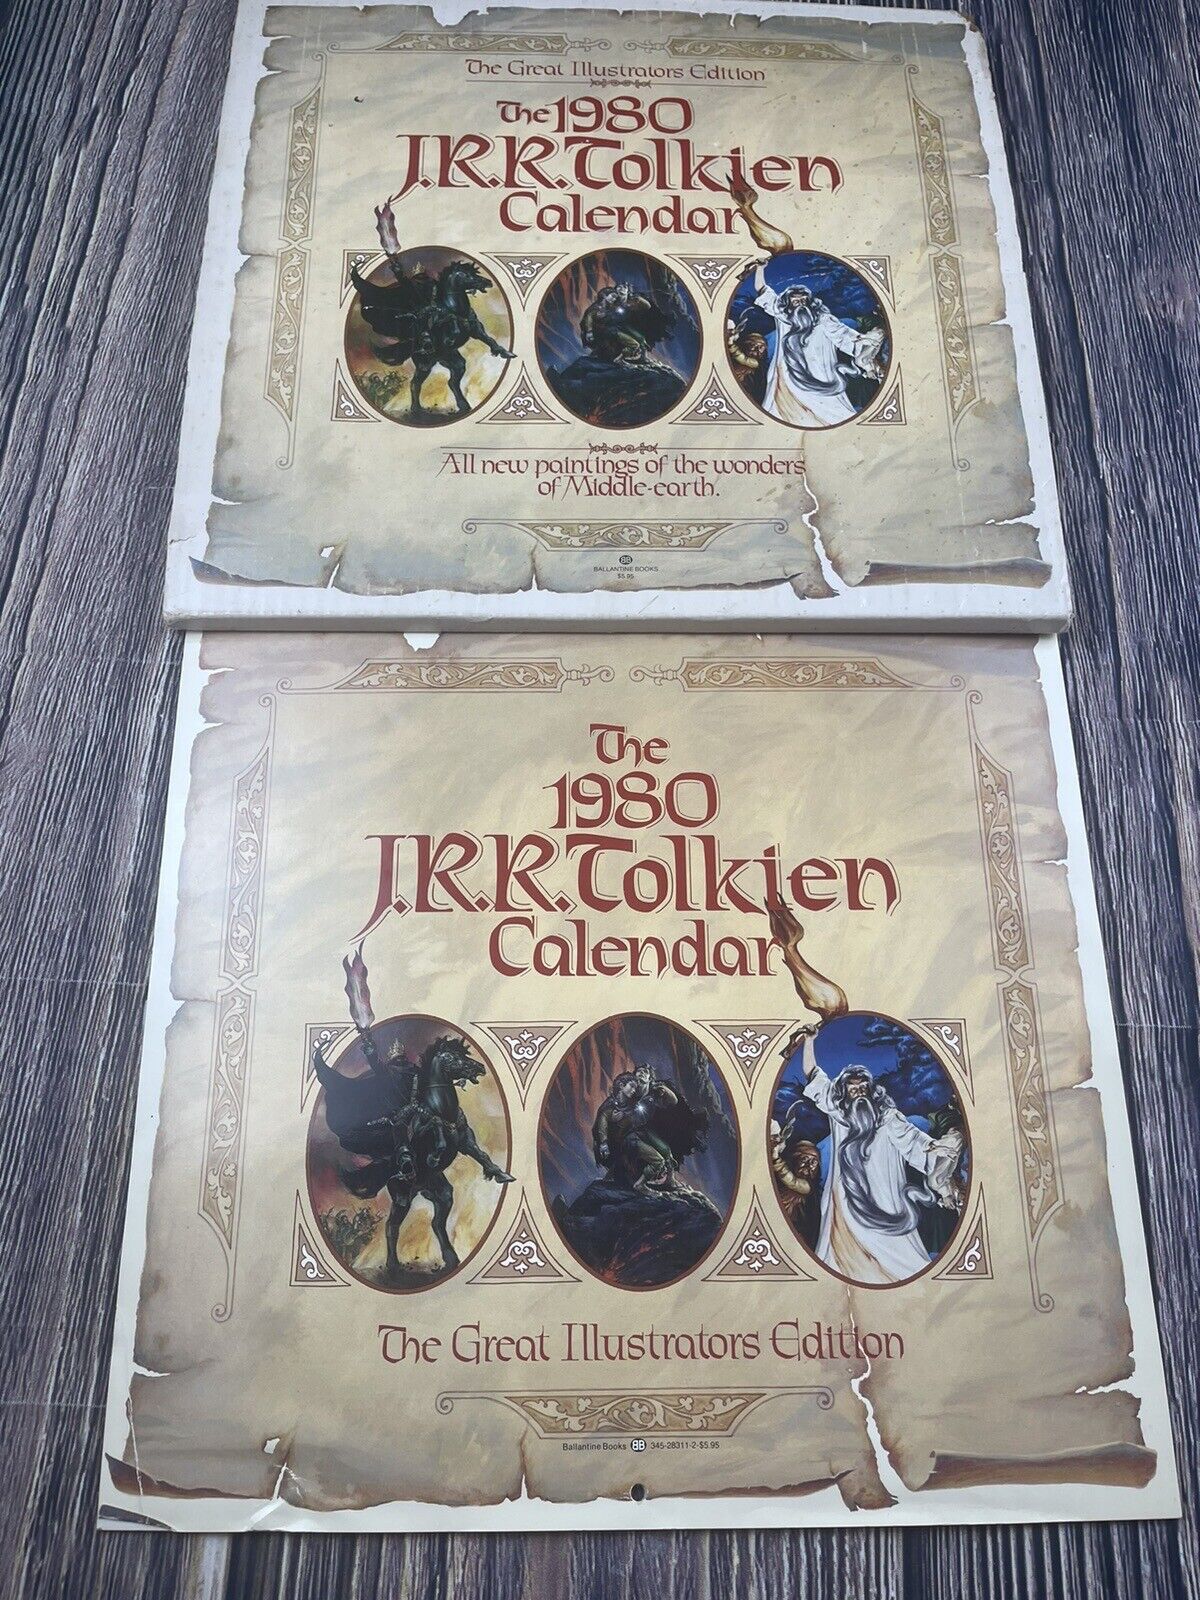 VTG J.R.R. Tolkien 1980 Calendar Lord of the Rings Great Illustrators Edition